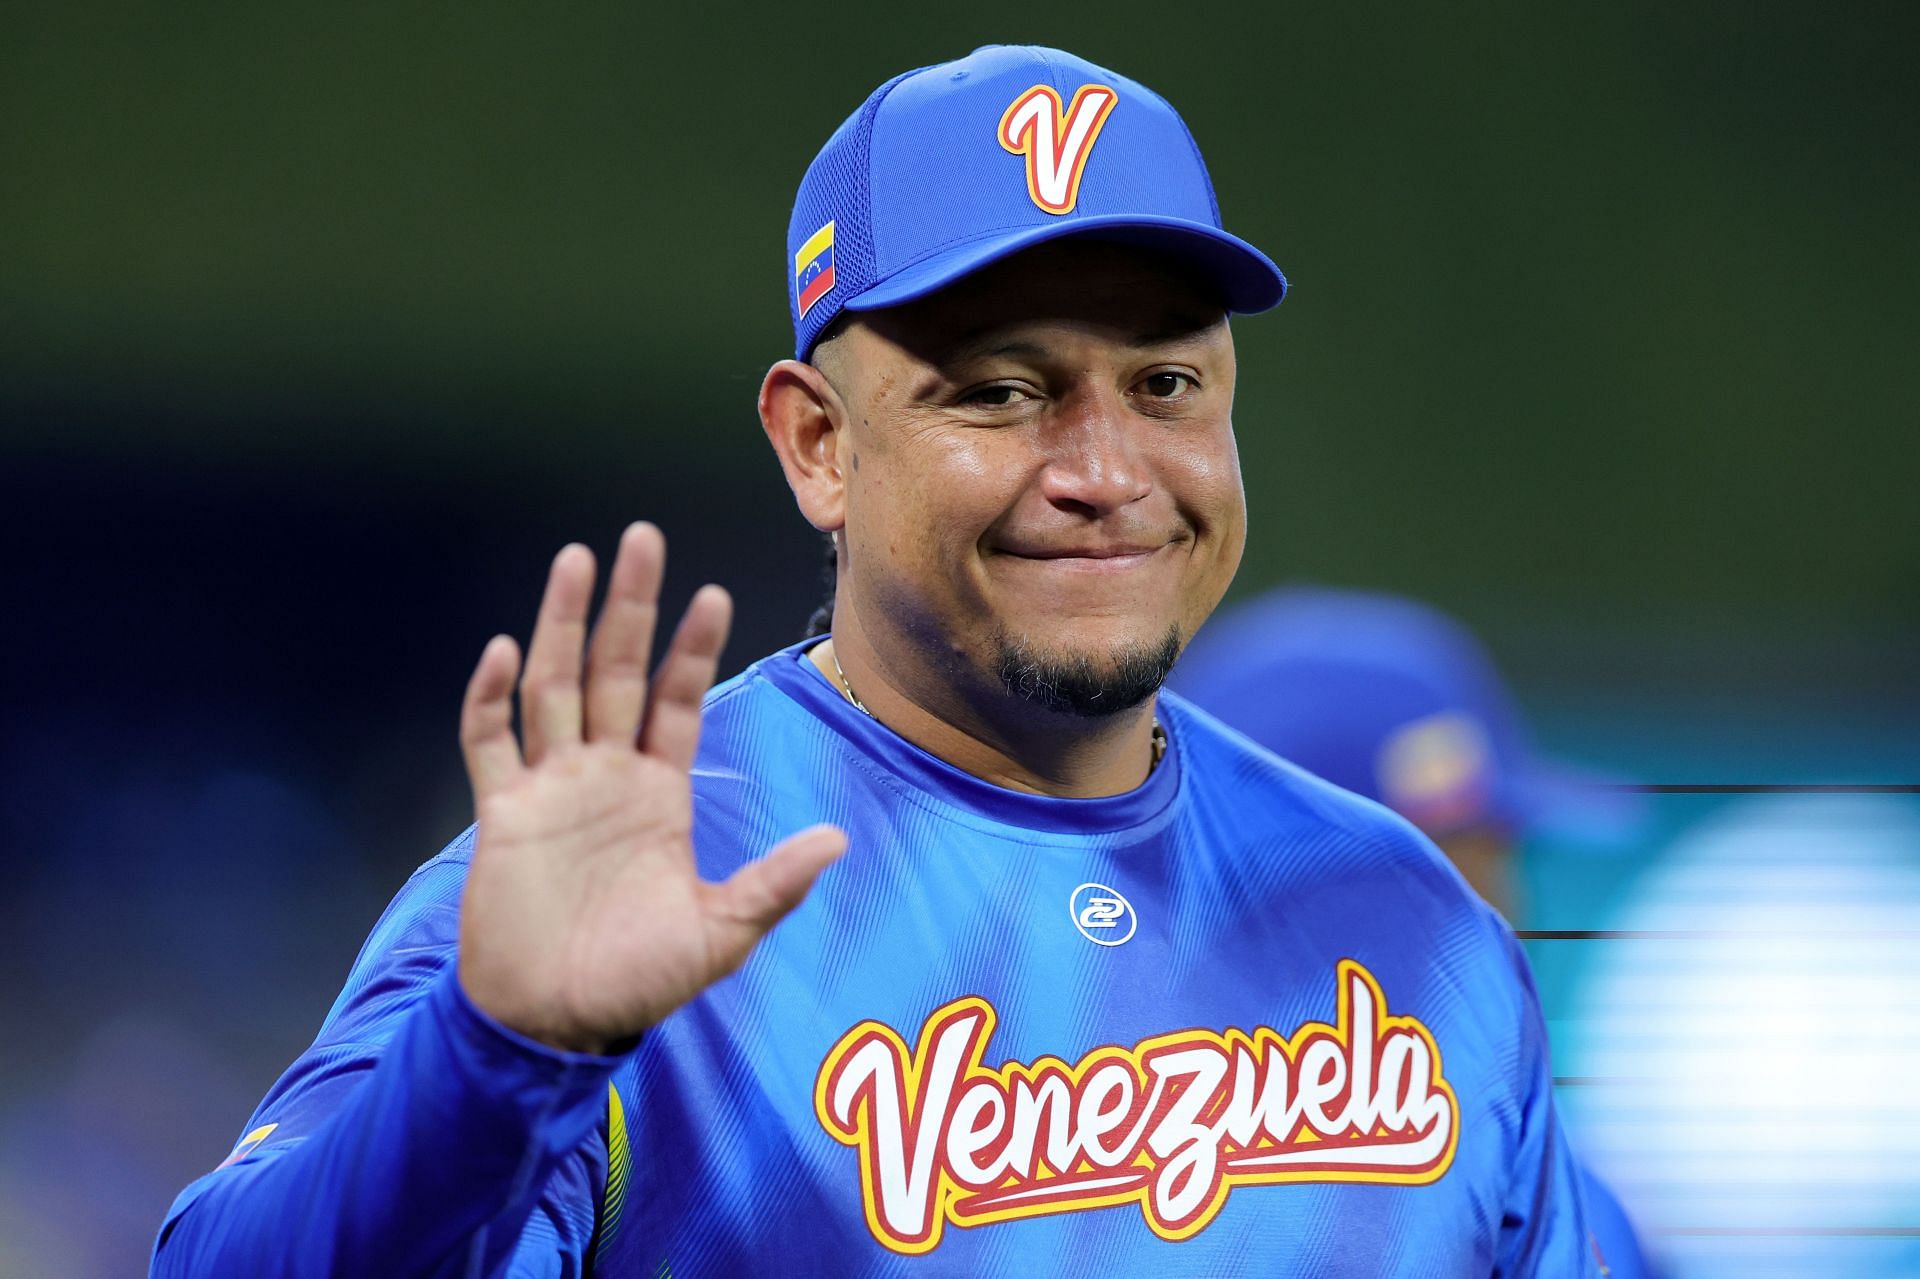 Cabrera and Sanchez will play for Venezuela in World Baseball